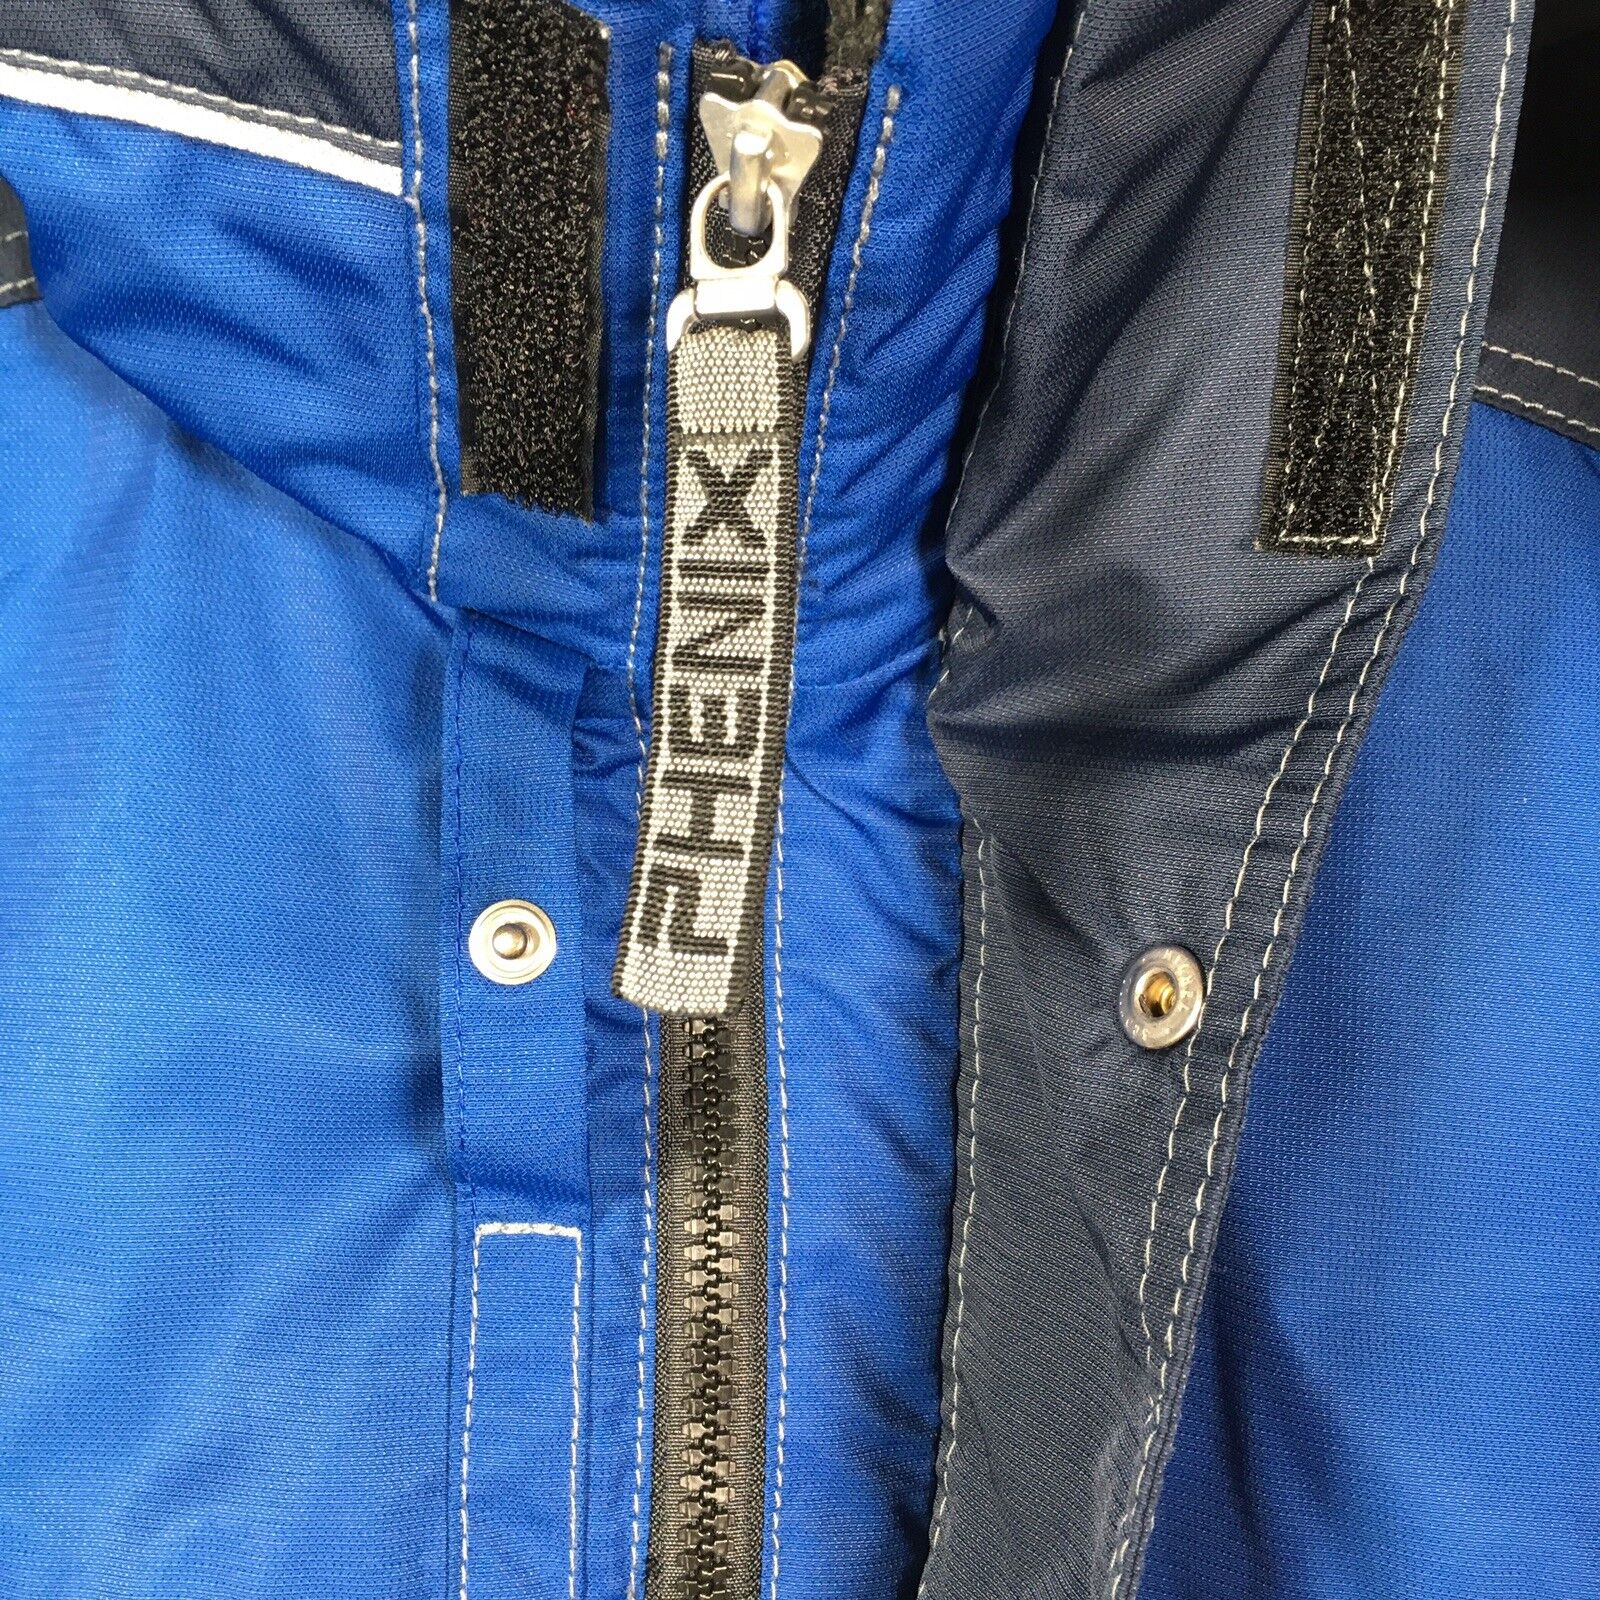 Phenix Ski Jacket Men's XL Blue W/ Hood Vintage | eBay